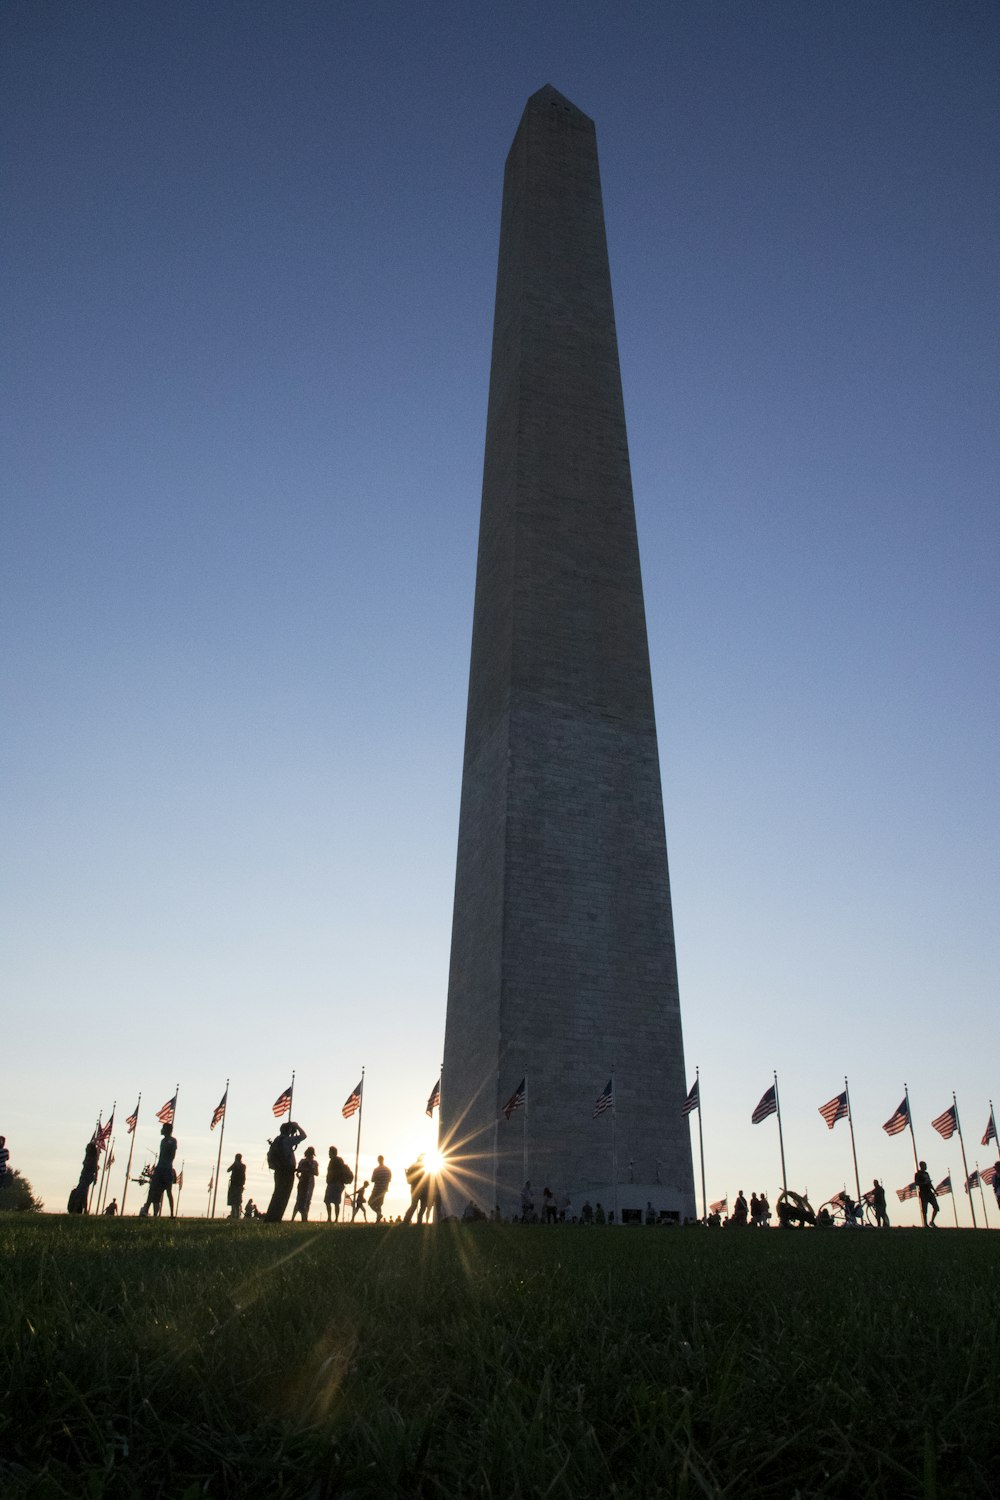 Un grupo de personas de pie frente al Monumento a Washington